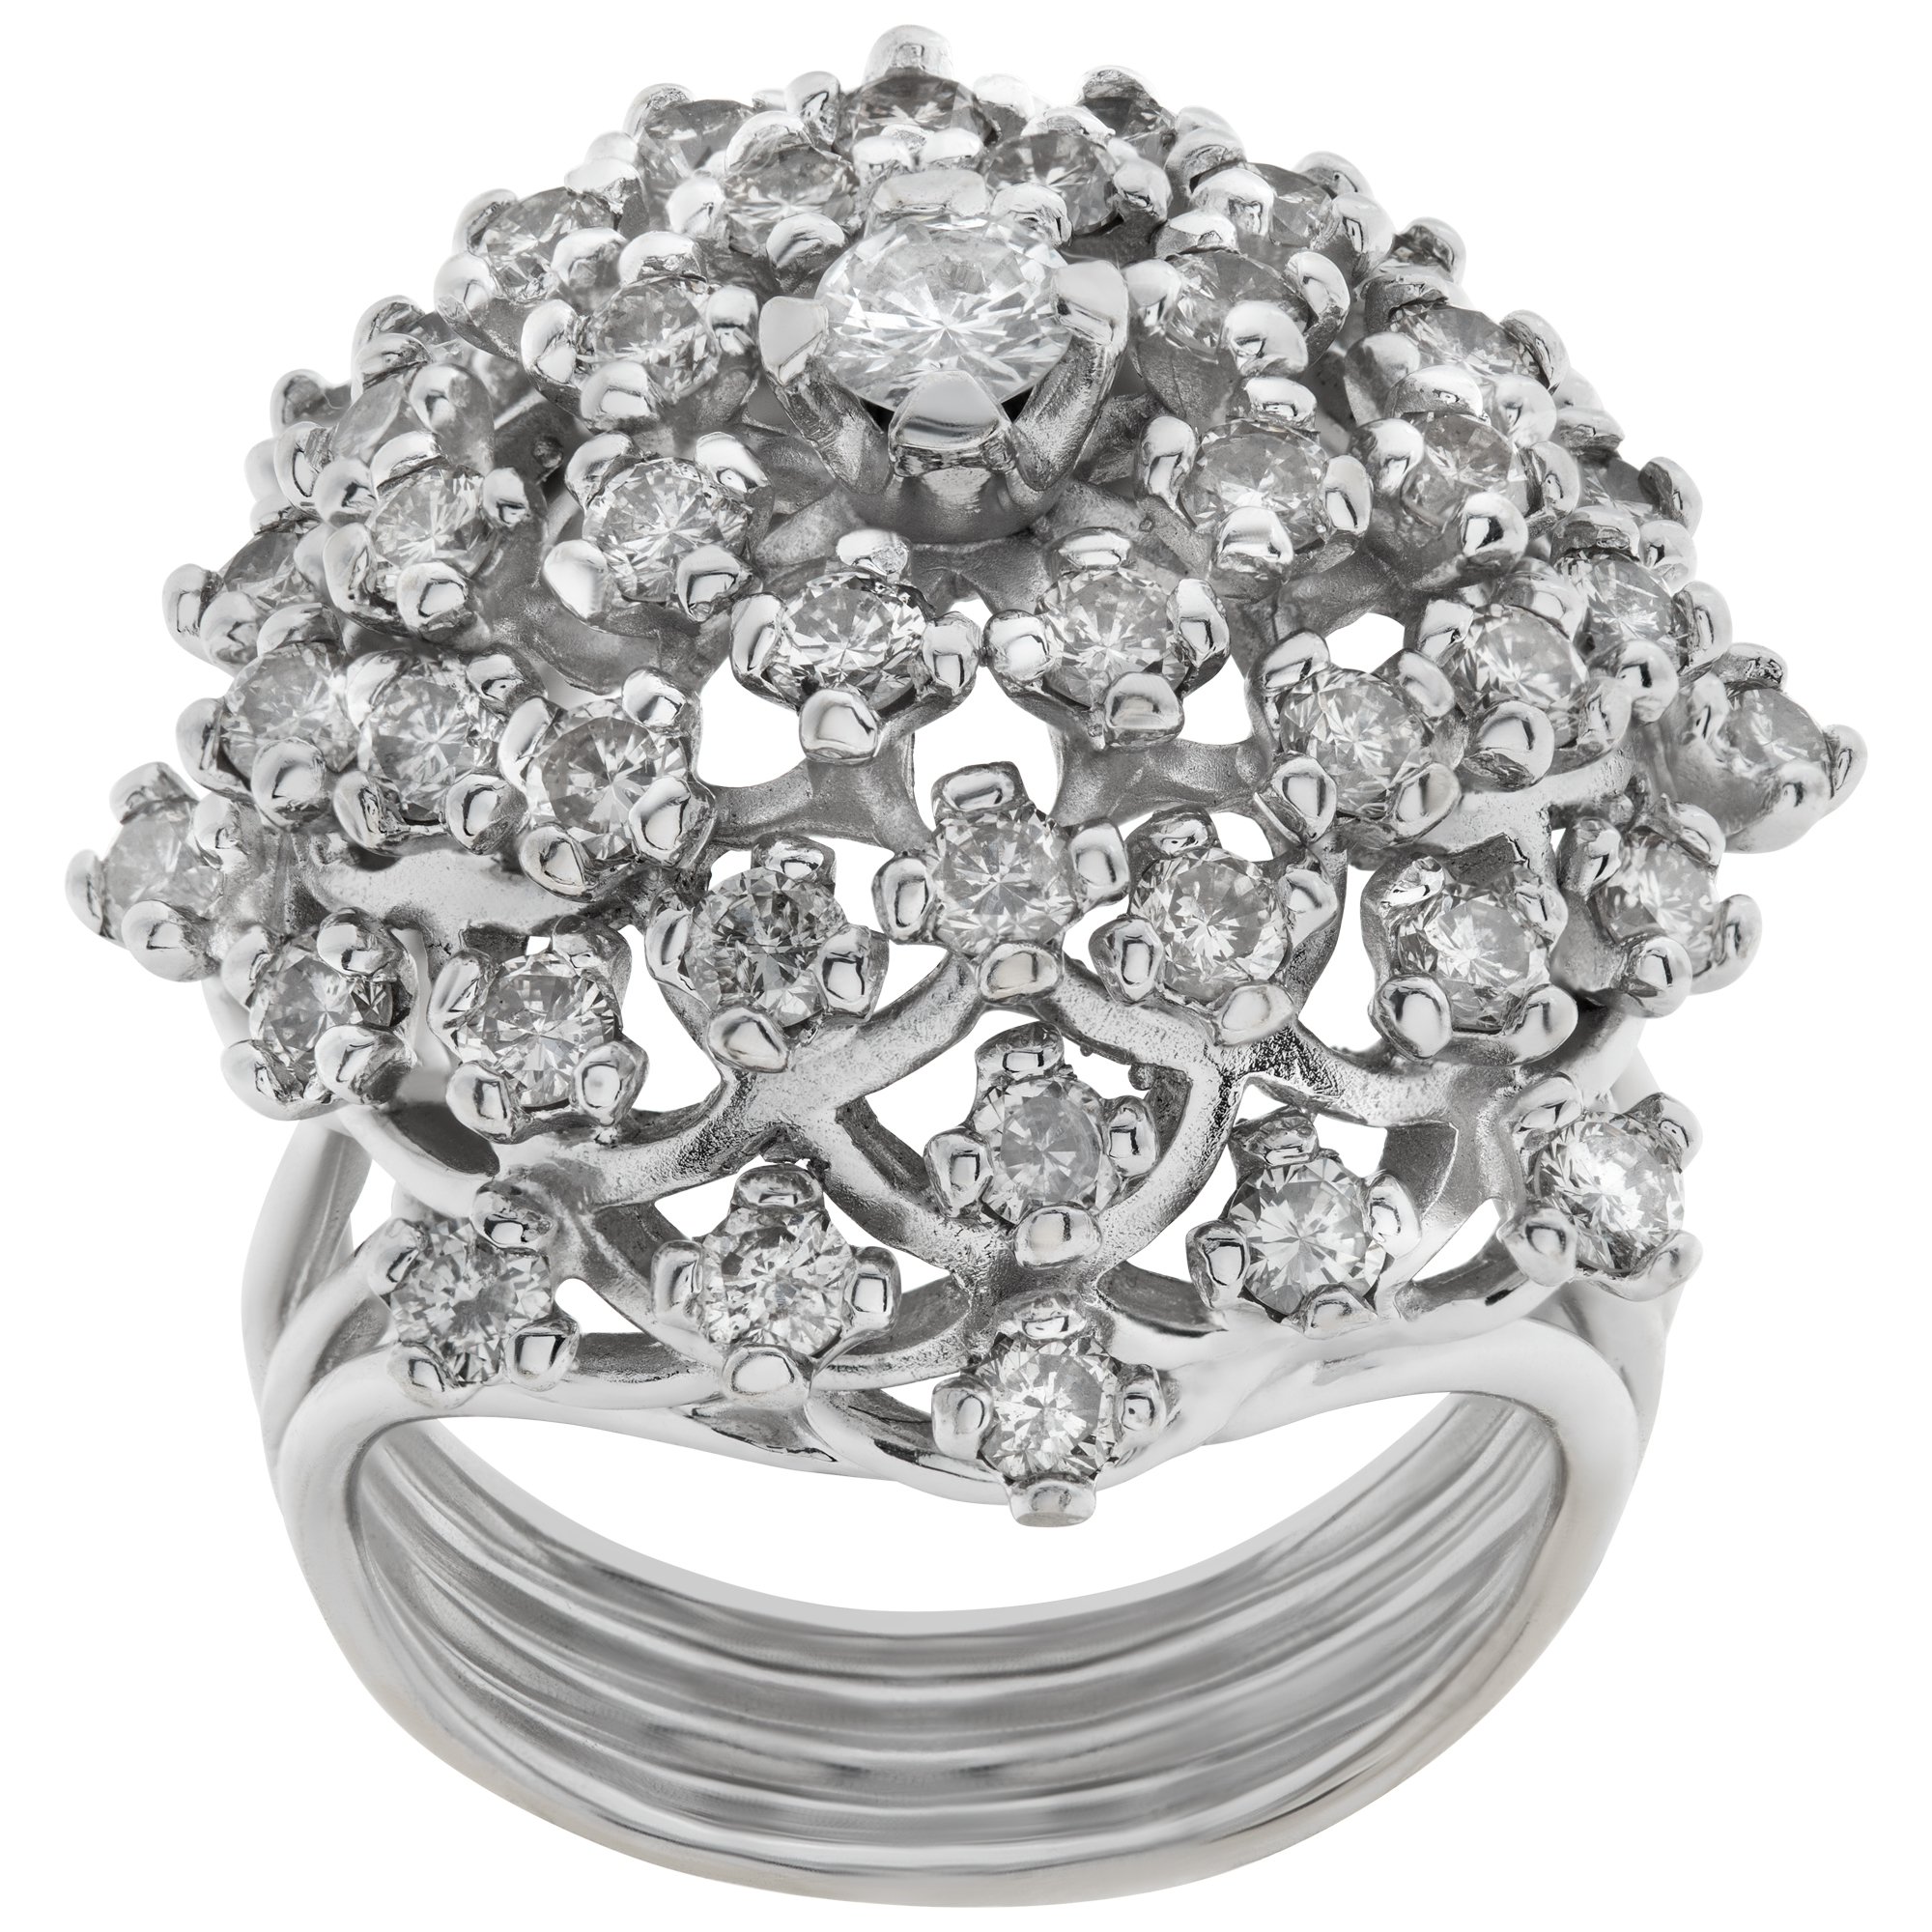 Diamond cluster ring in 18k white gold. 2.00 carats in diamonds. Size 6.5.